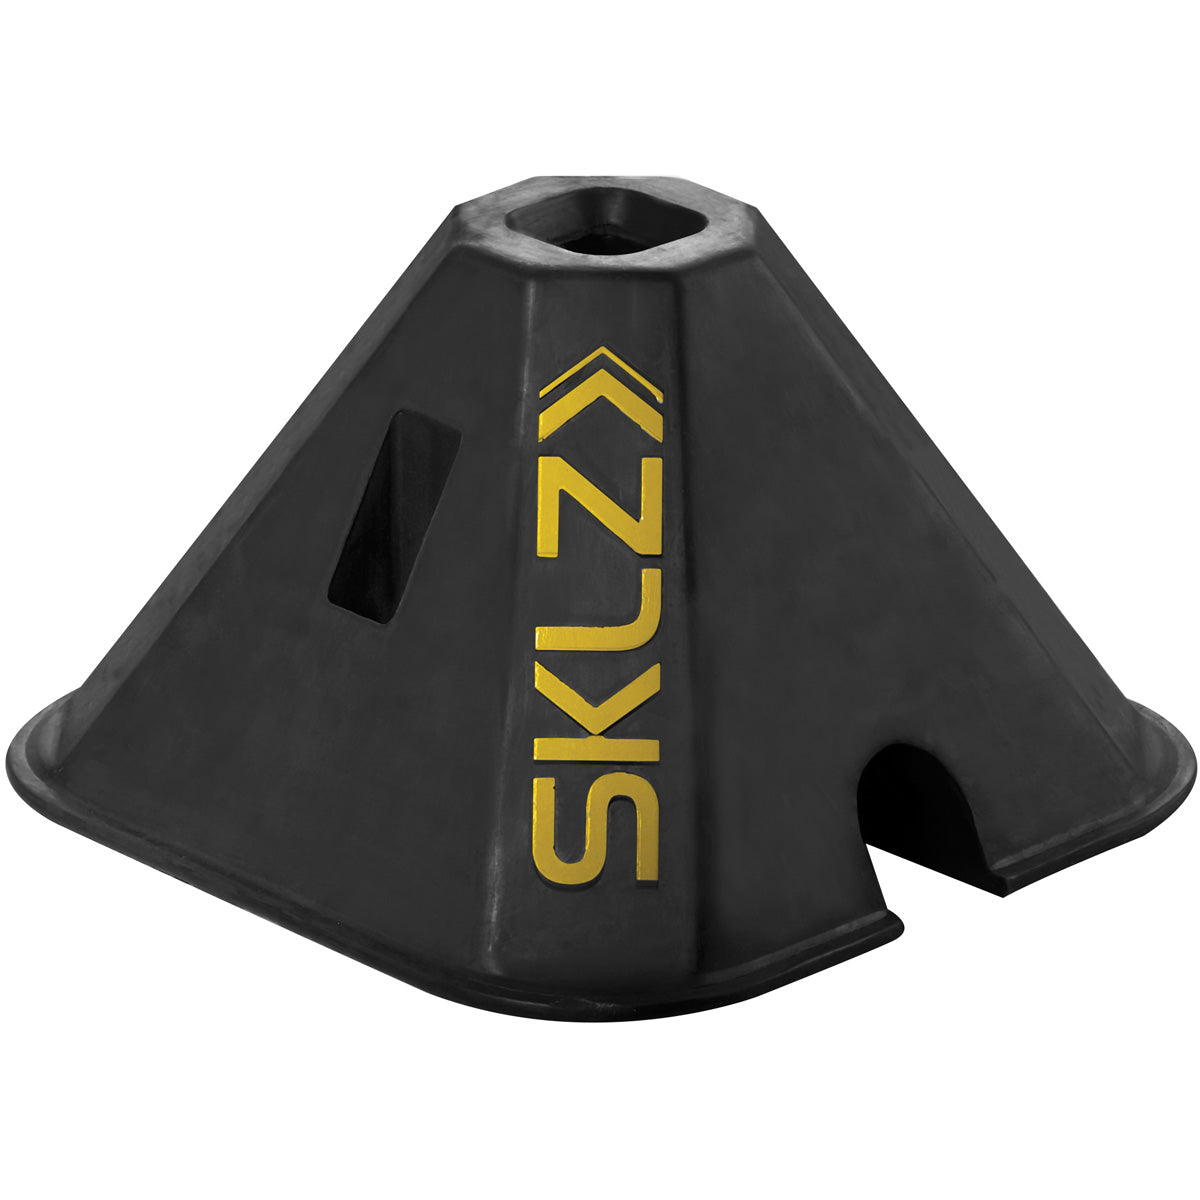 SKLZ Pro Training Utility Weights 2-Pack SKLZ